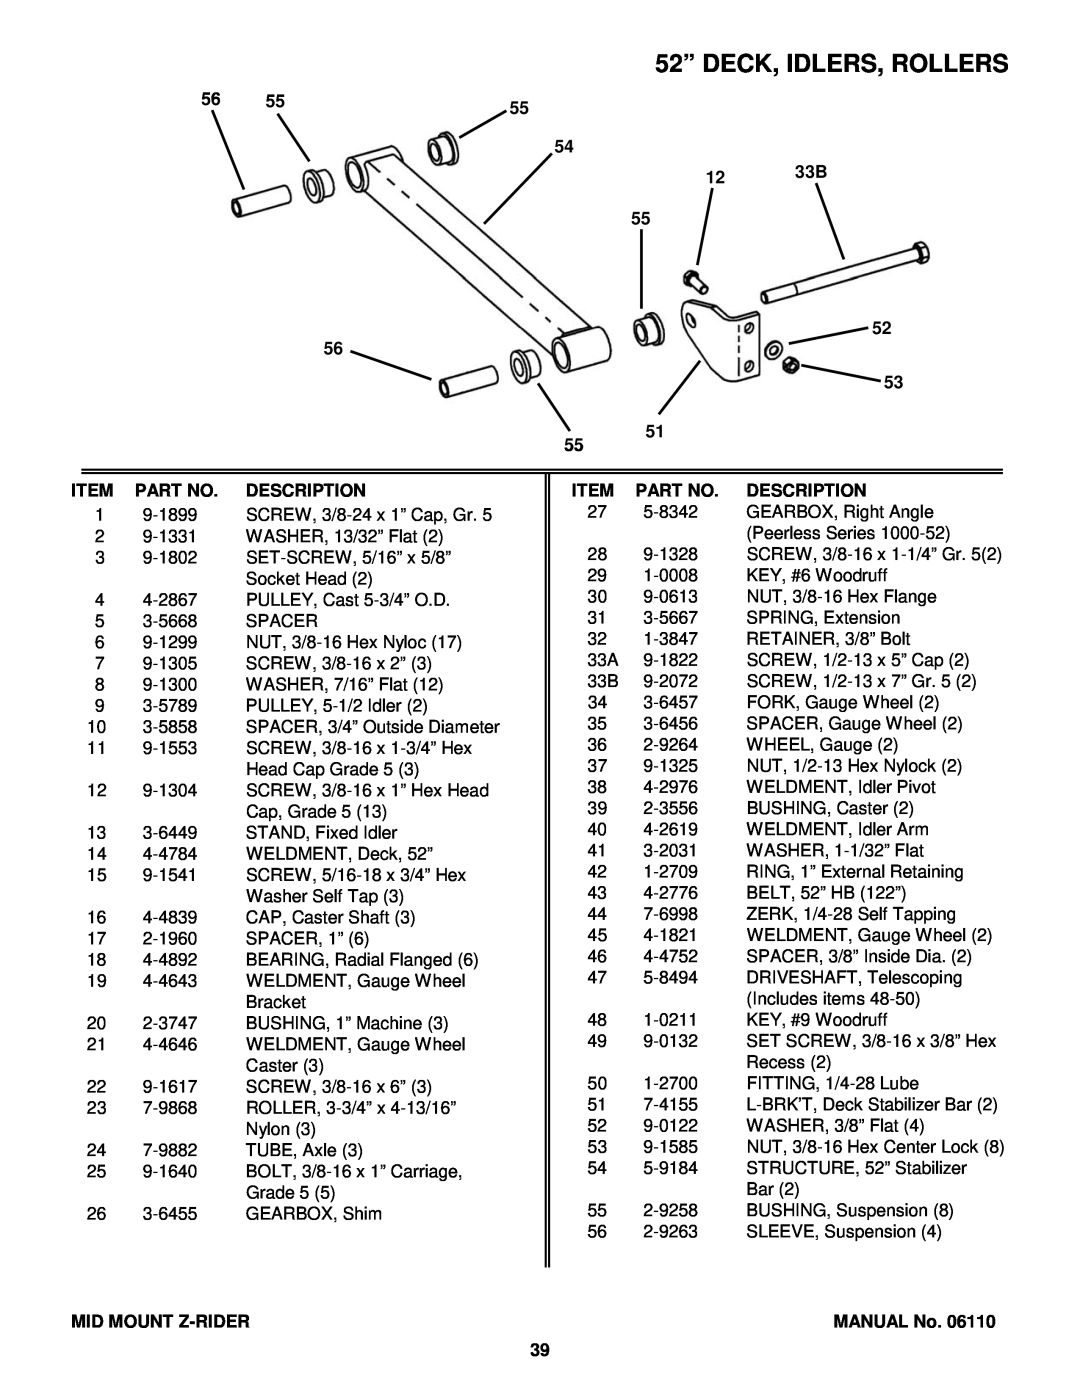 Snapper ZM2500KH manual 52” DECK, IDLERS, ROLLERS, Item Part No. Description, 54 12 33B 55 52, Mid Mount Z-Rider, MANUAL No 